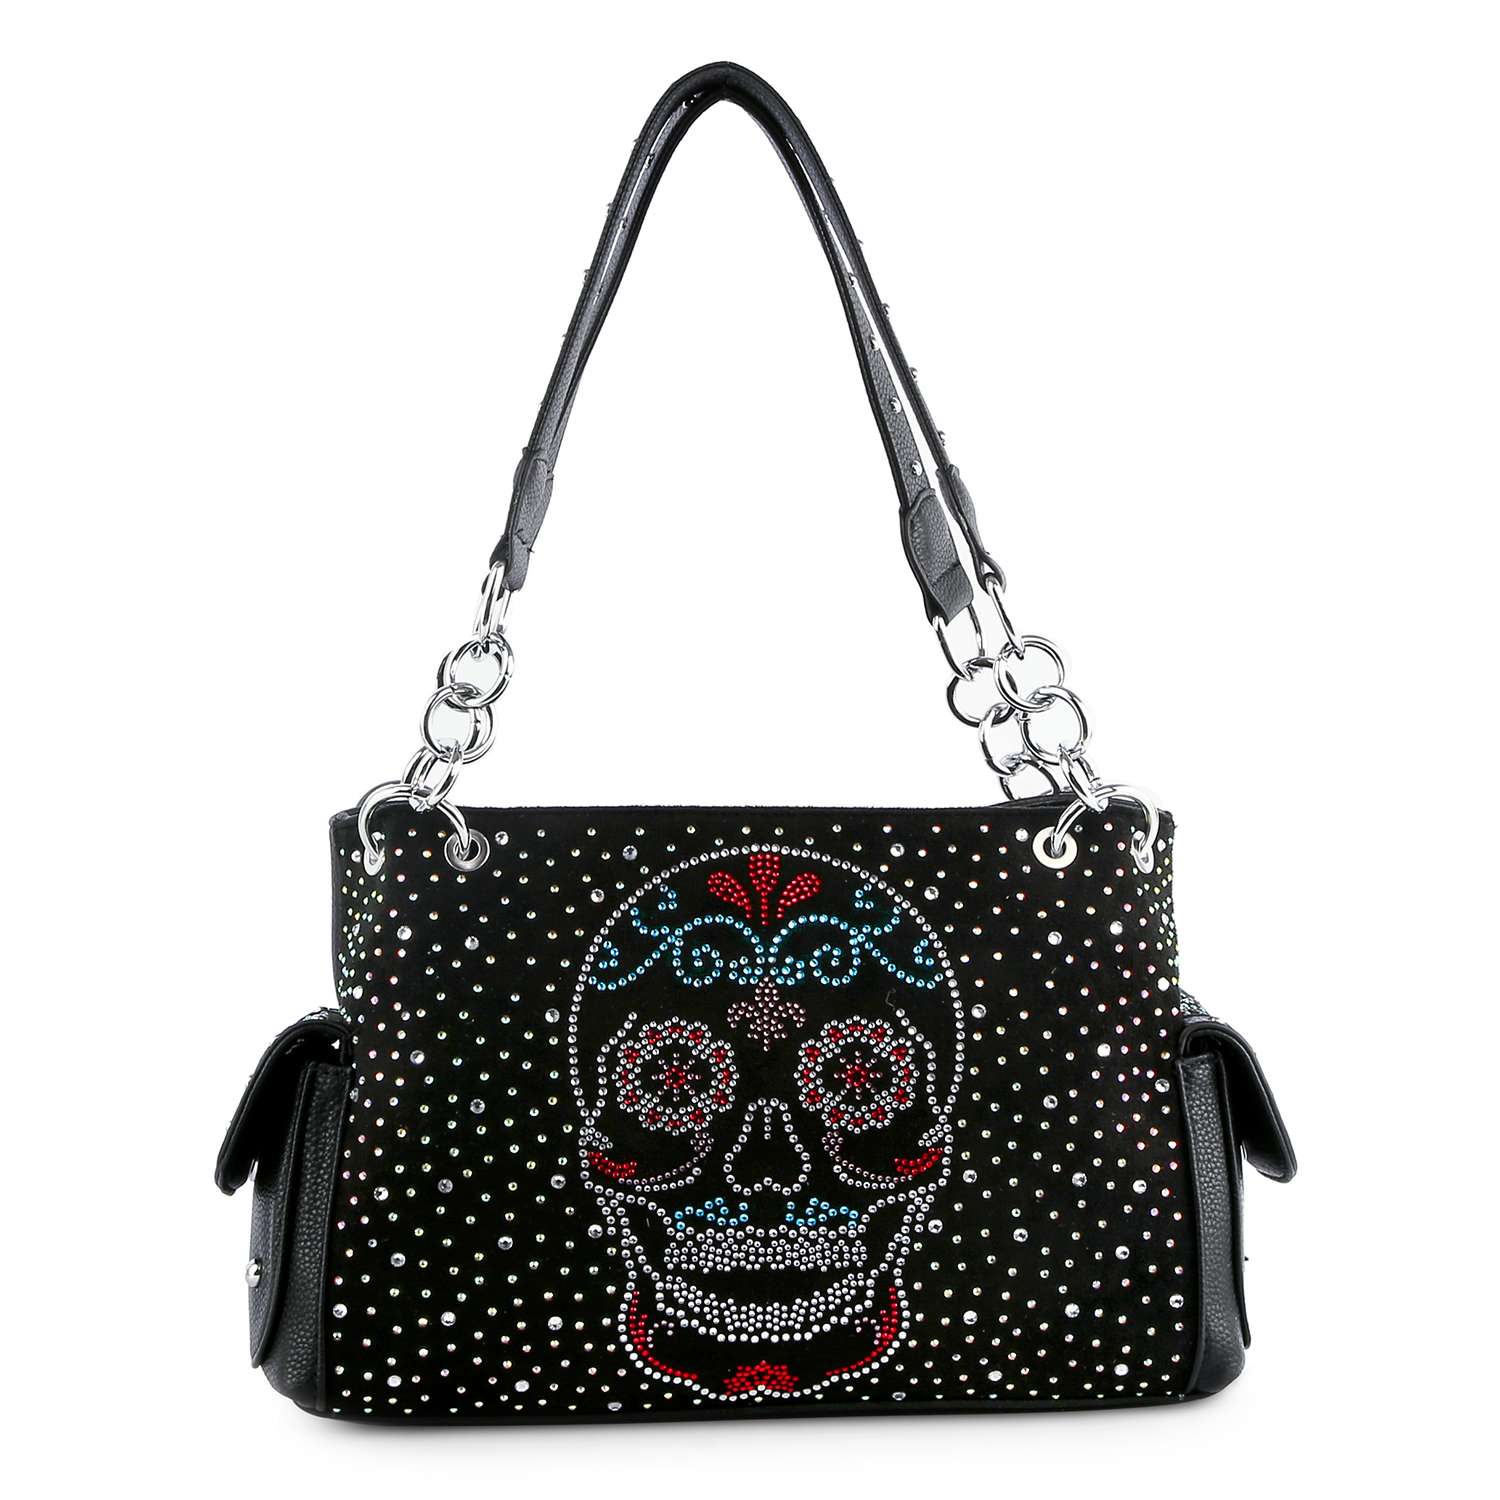 Sugar Skull Fashion Handbag - Black